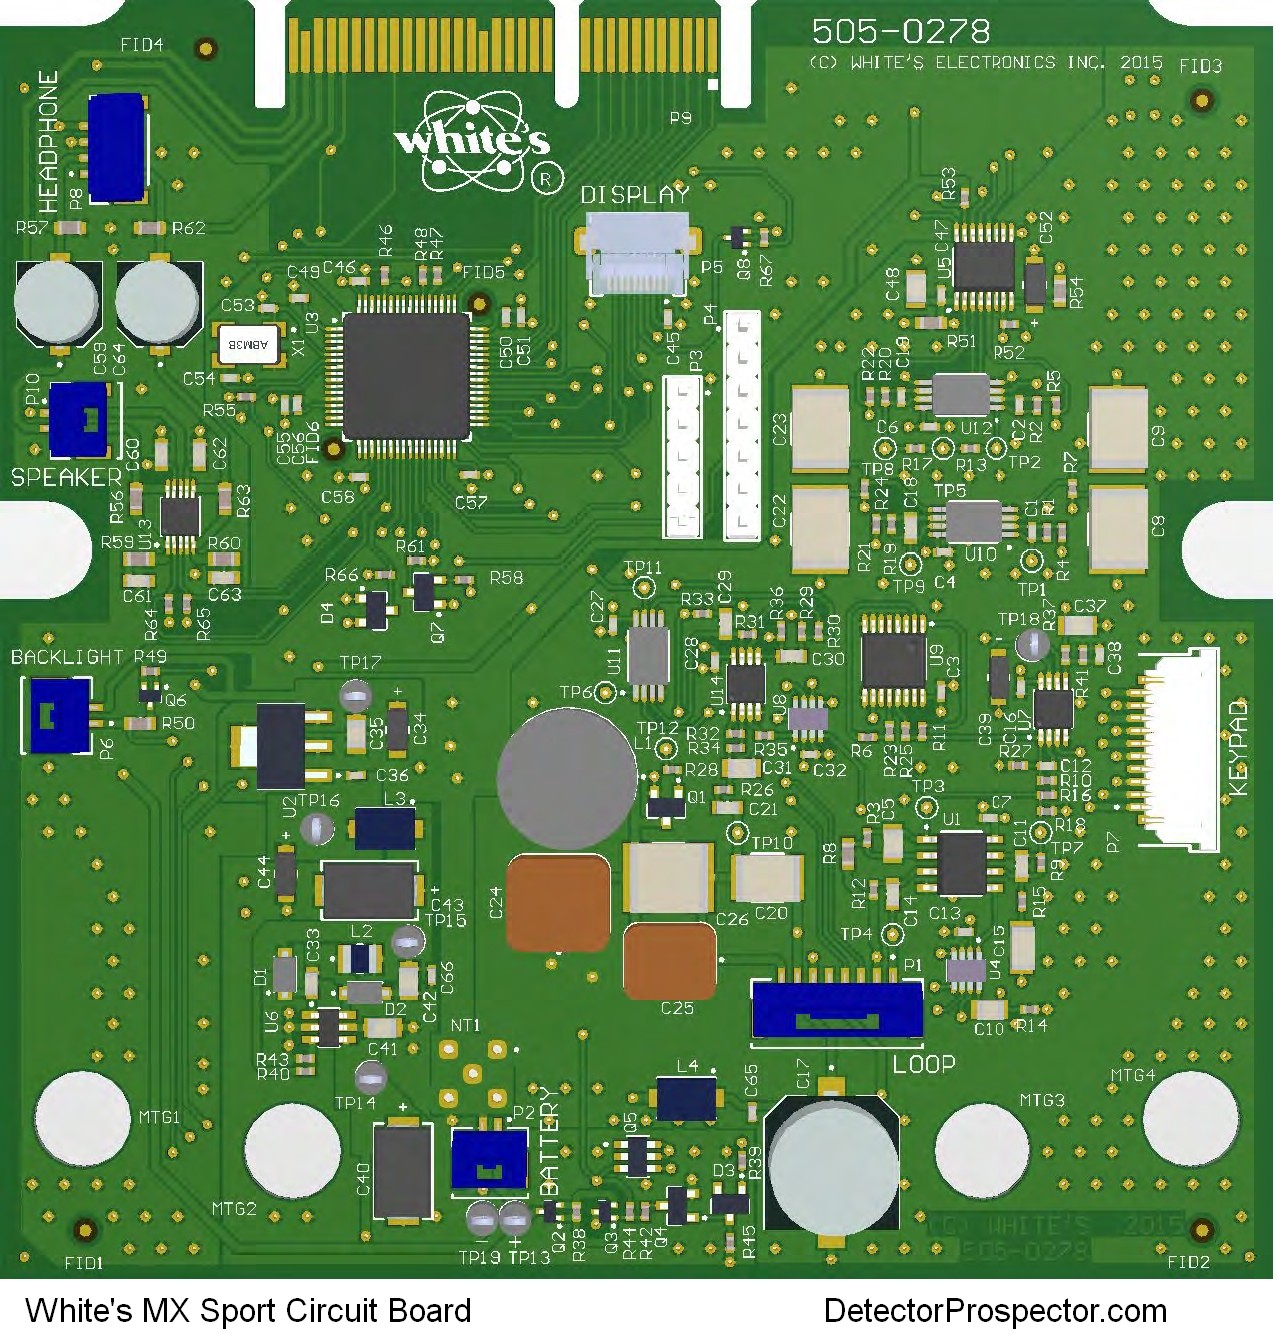 white's-mx-sport-circuit-board.jpg